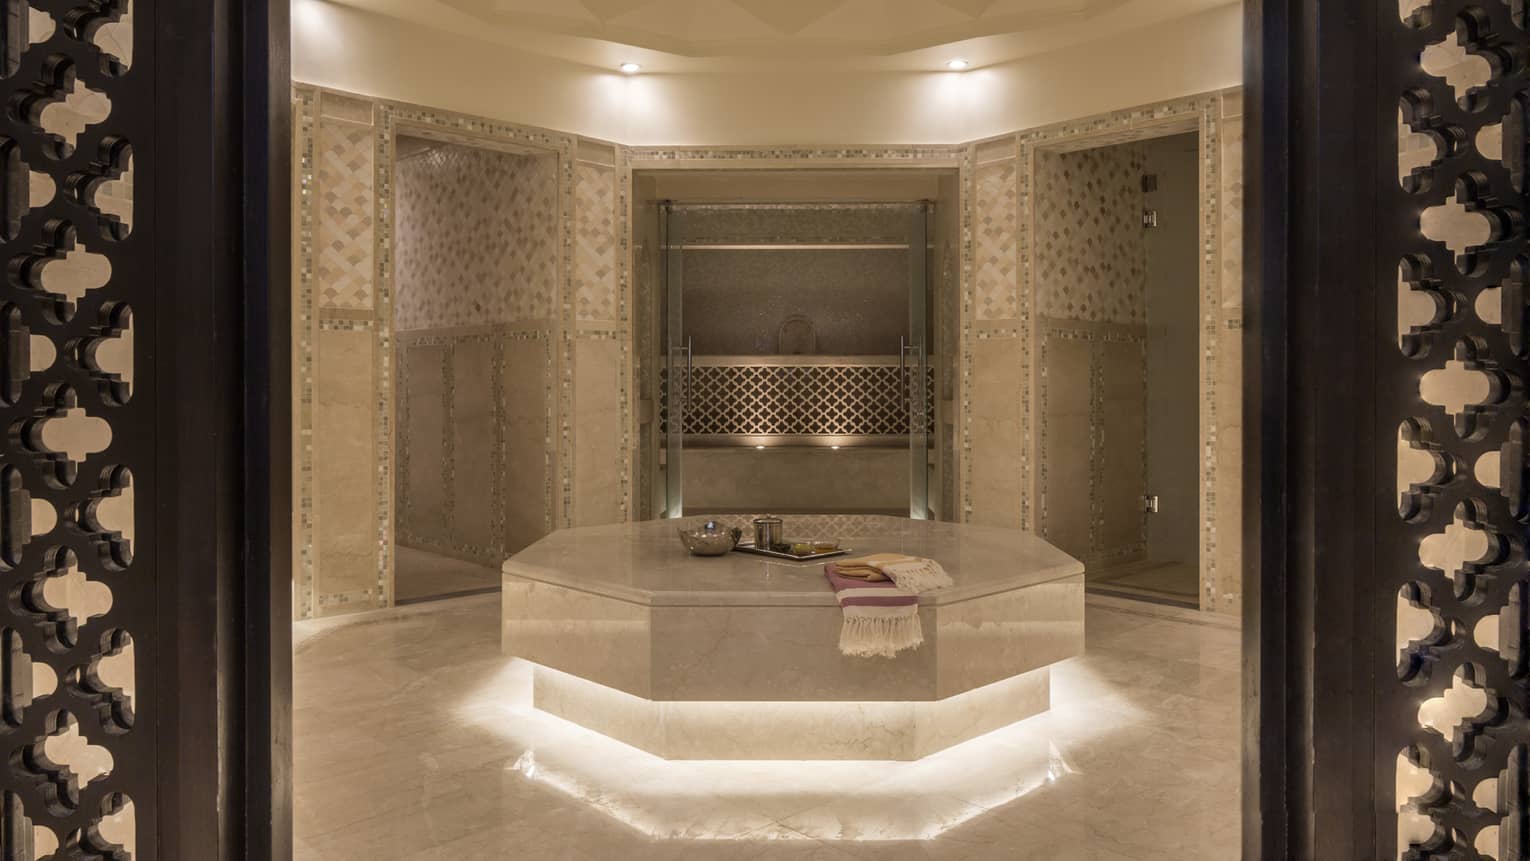 Hammam room with illuminated under lighting, beige marble